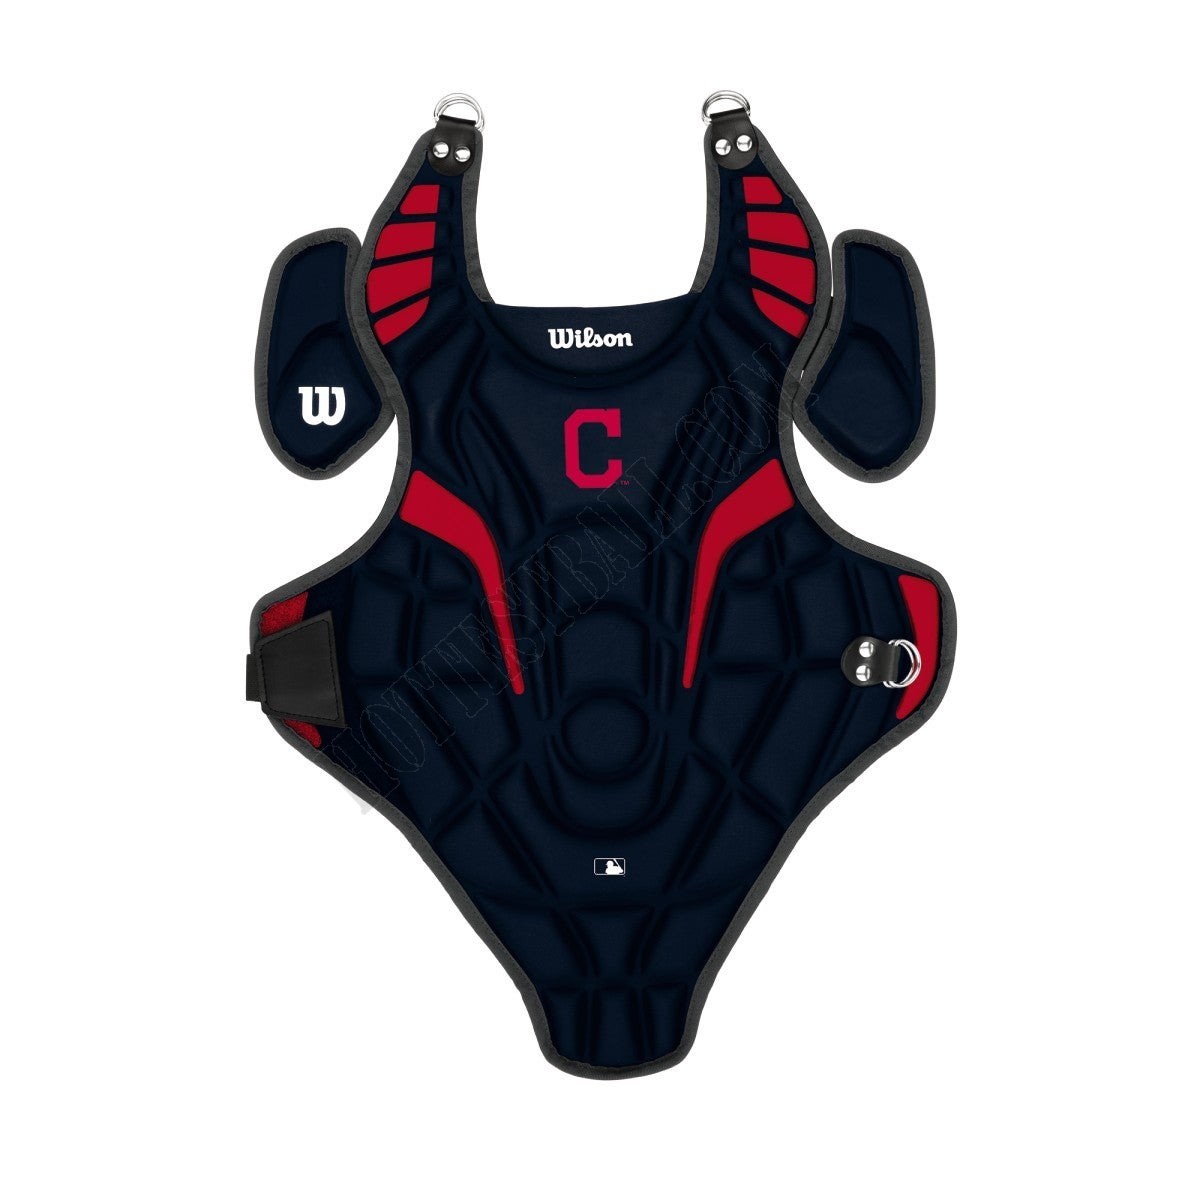 EZ Gear Catcher's Kit - Cleveland Indians - Wilson Discount Store - -0